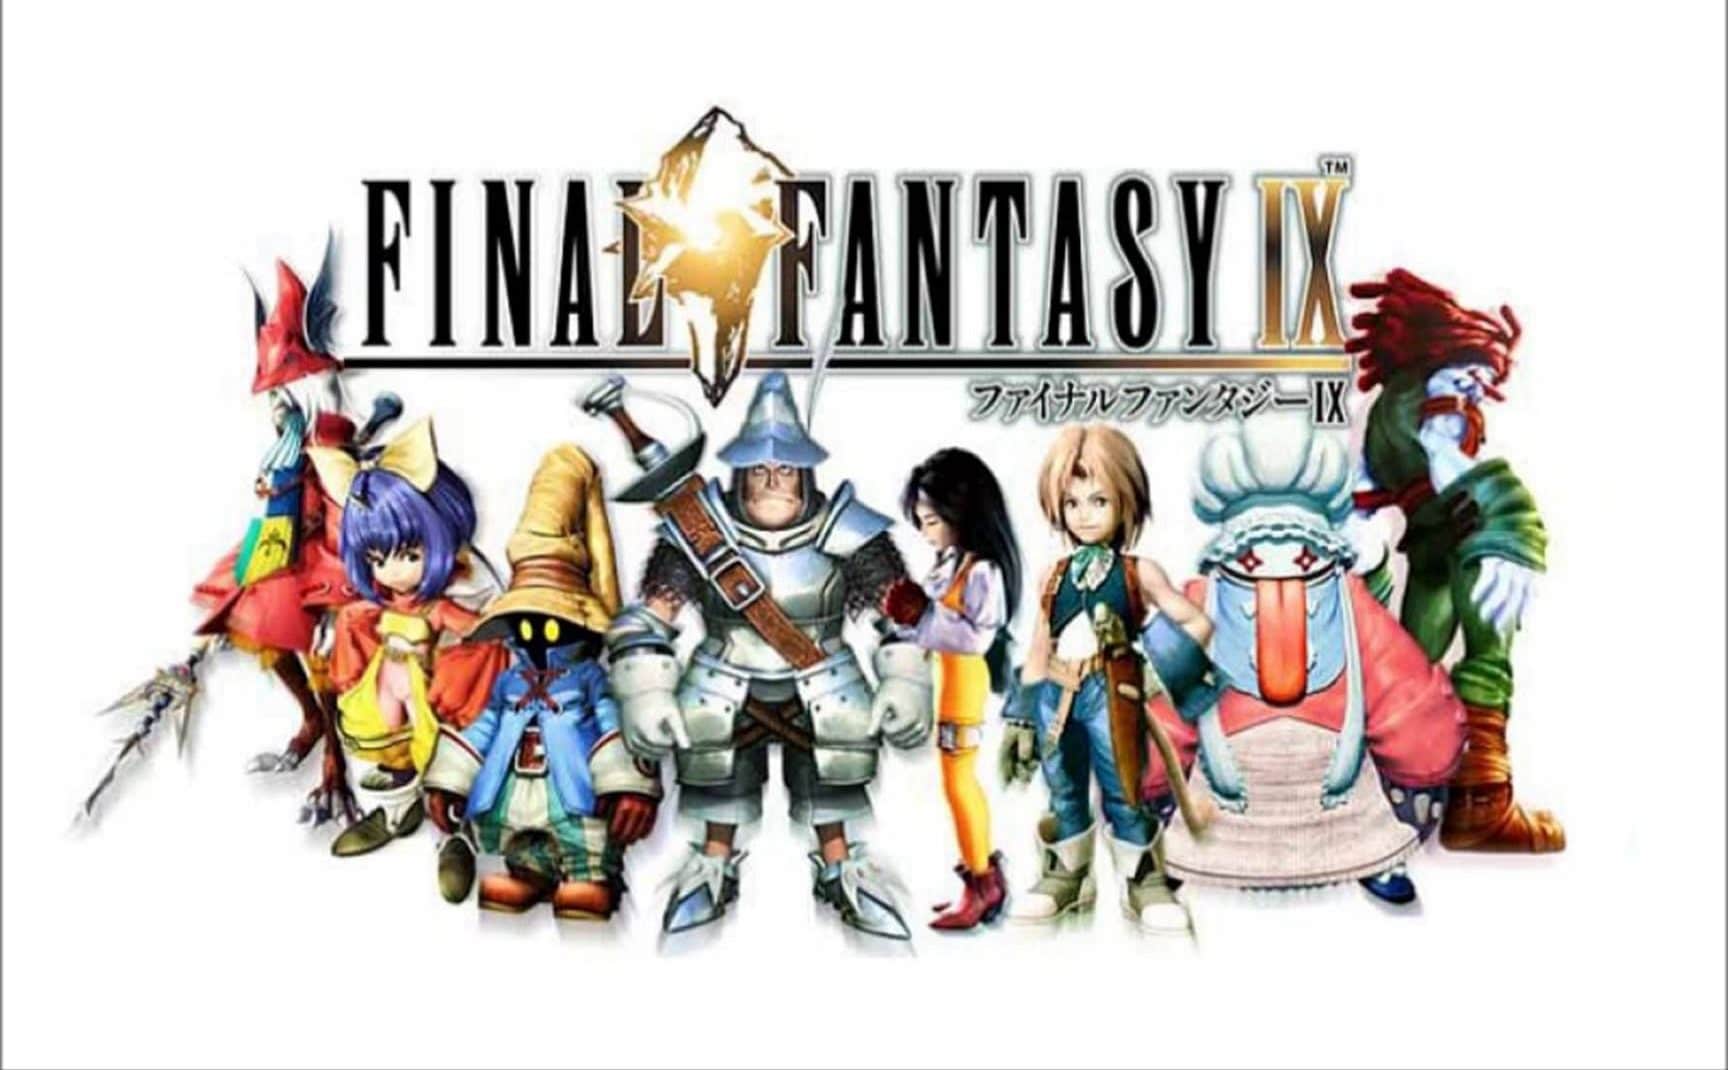 More information about "Final Fantasy IX Retrospective"